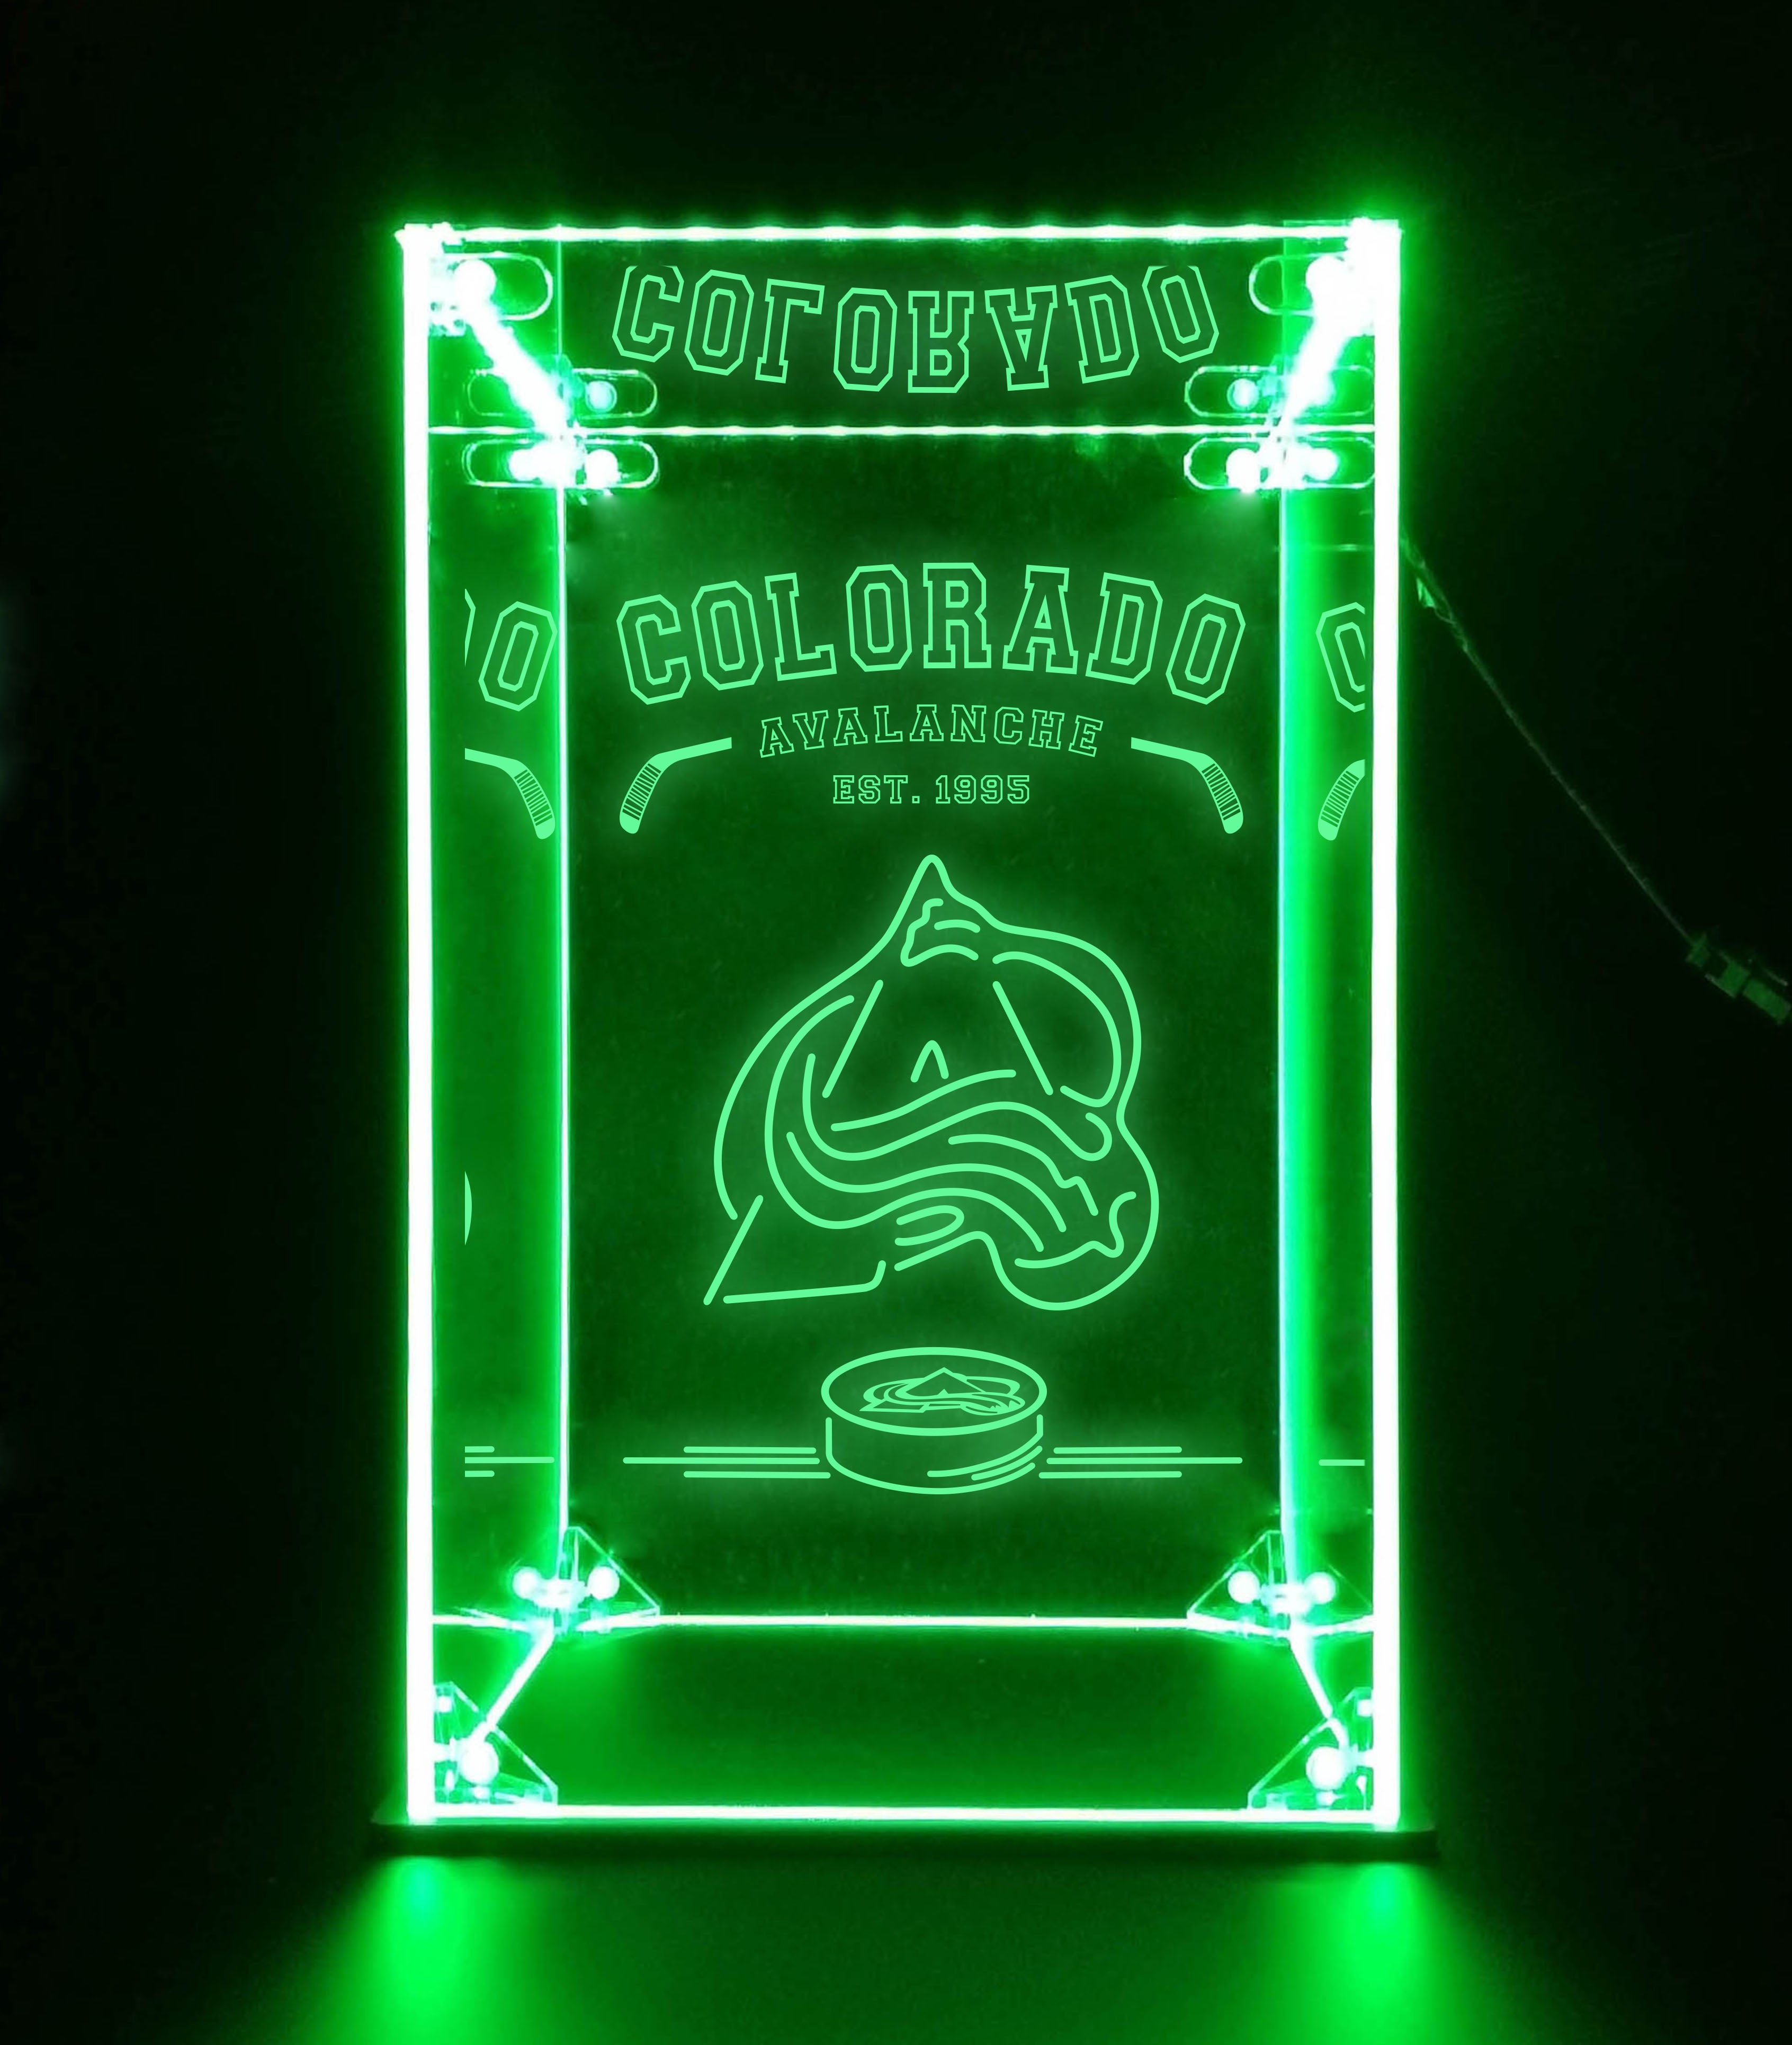 LED Display Case For Colorado Avalanche Sports Memorabilia